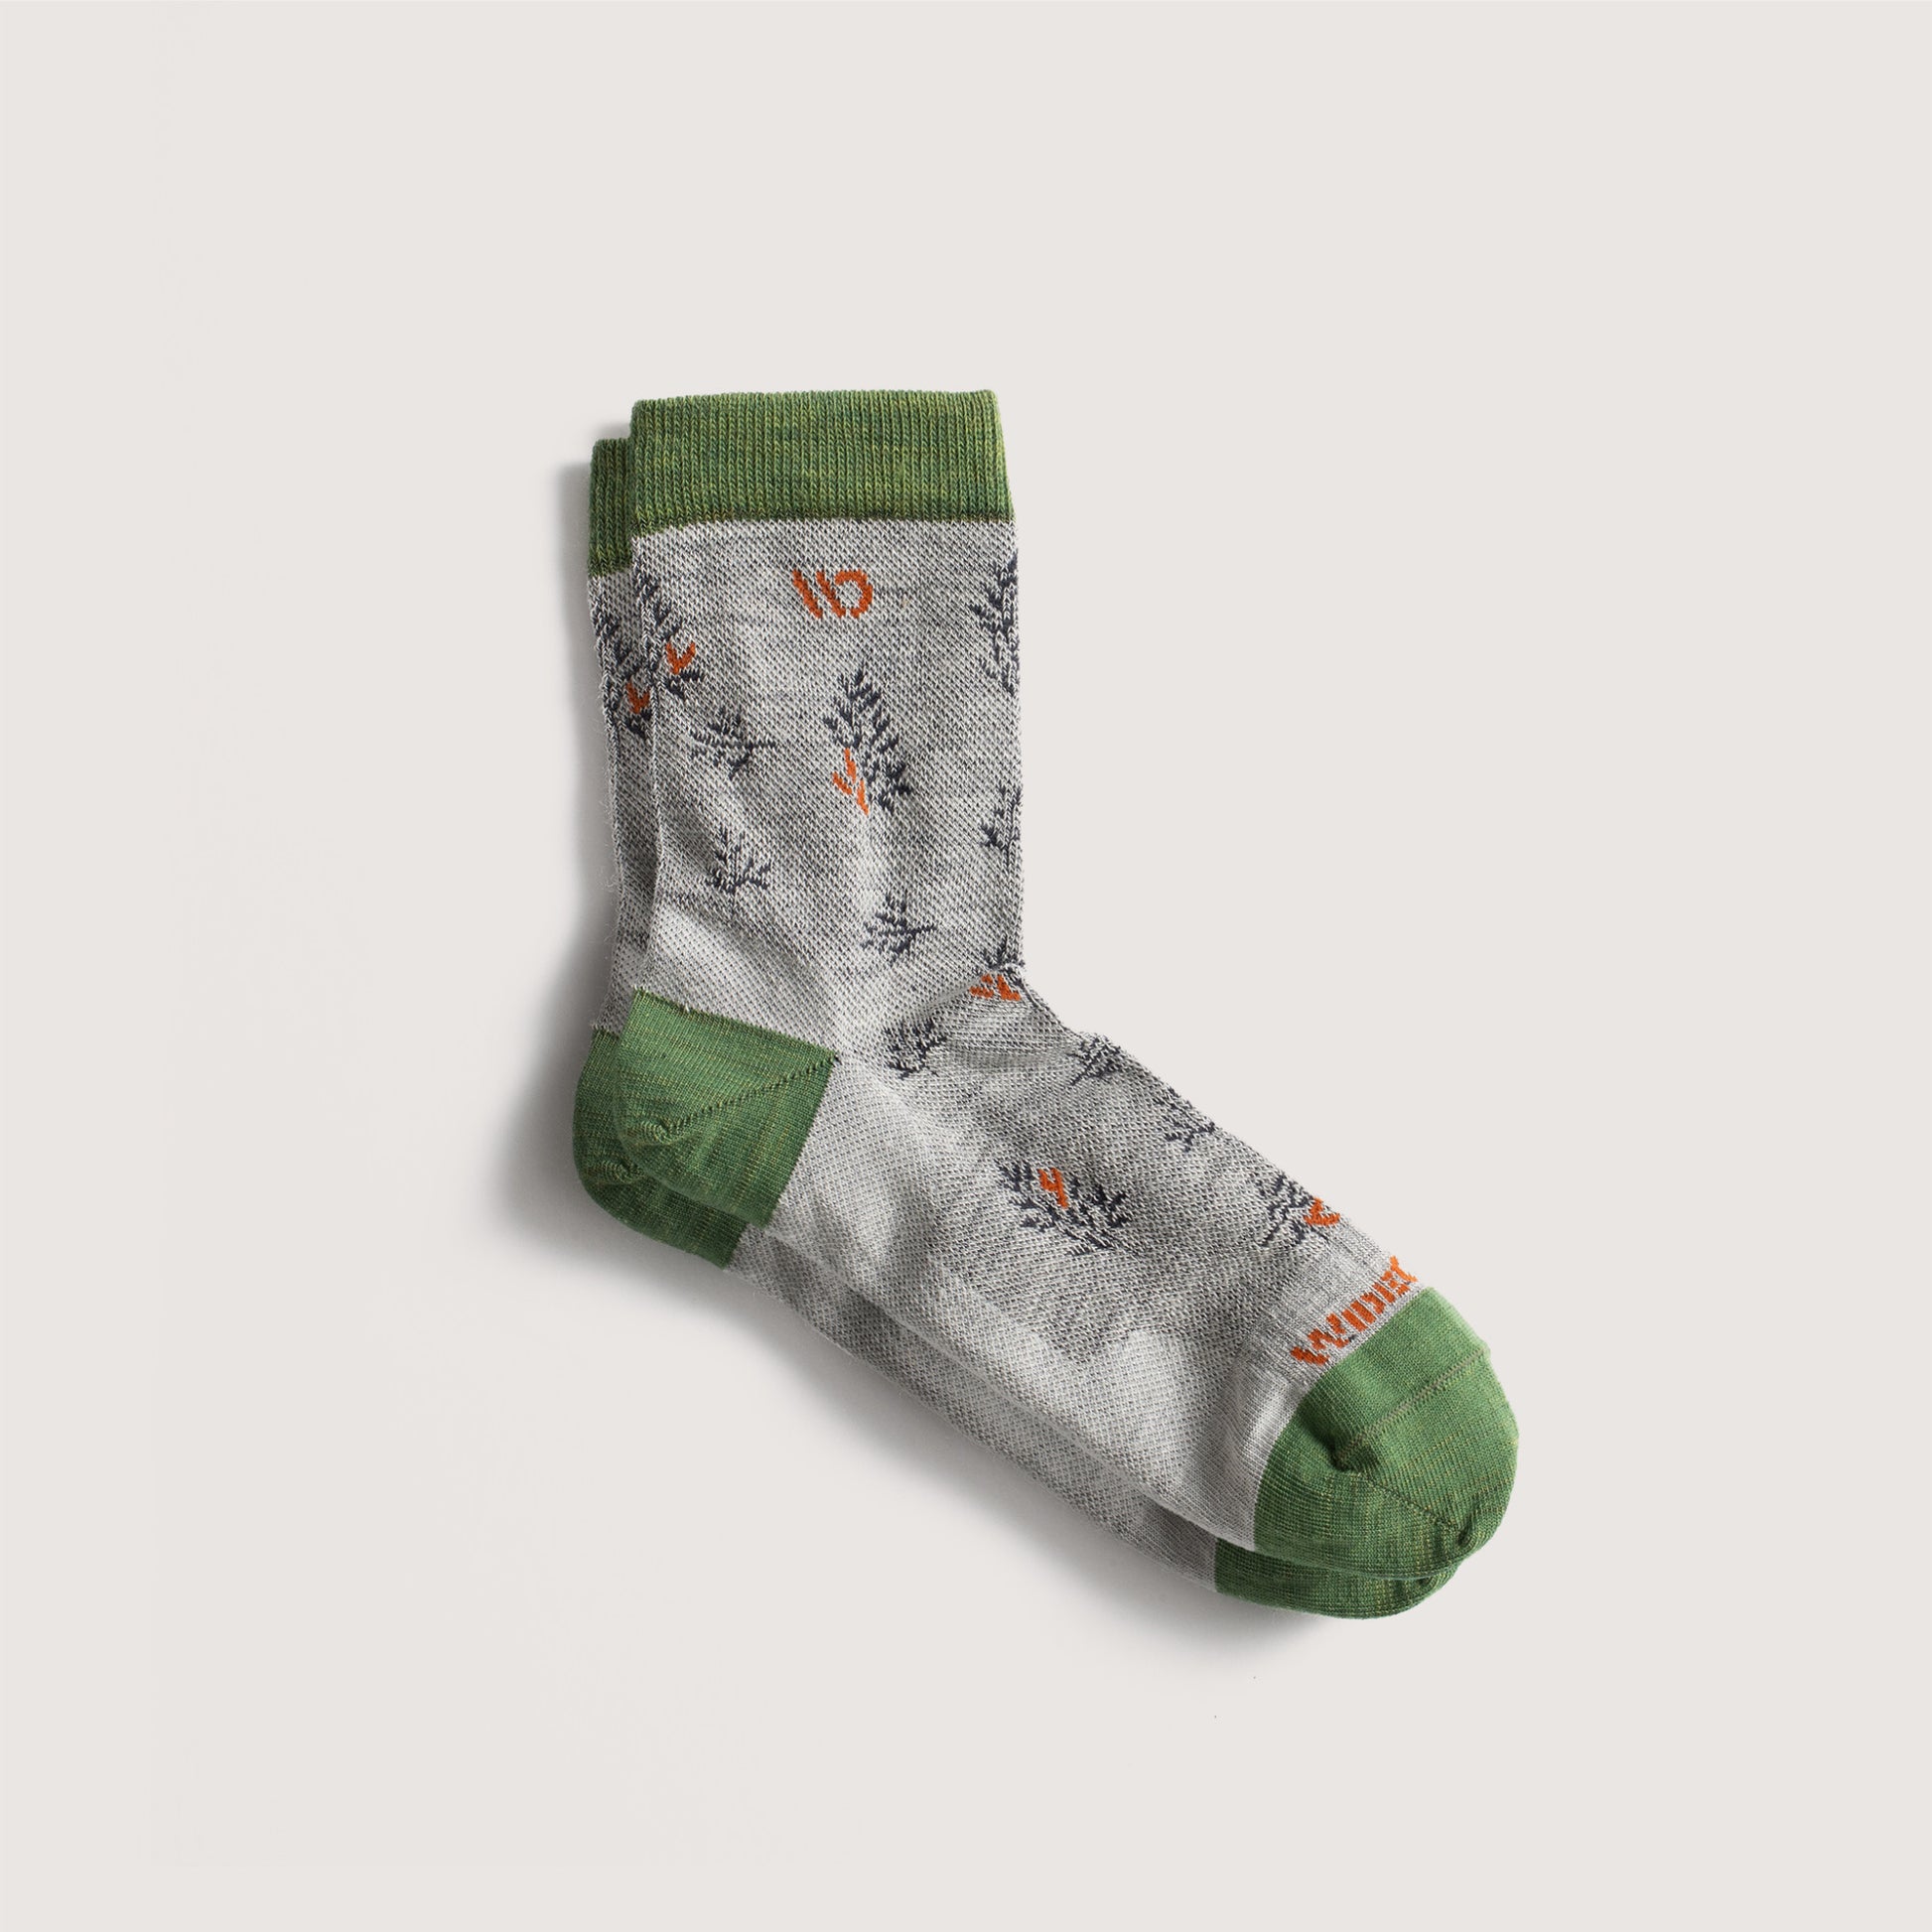 Flat socks featuring green toe, light gray body, orange logo and navy detail --Light Gray